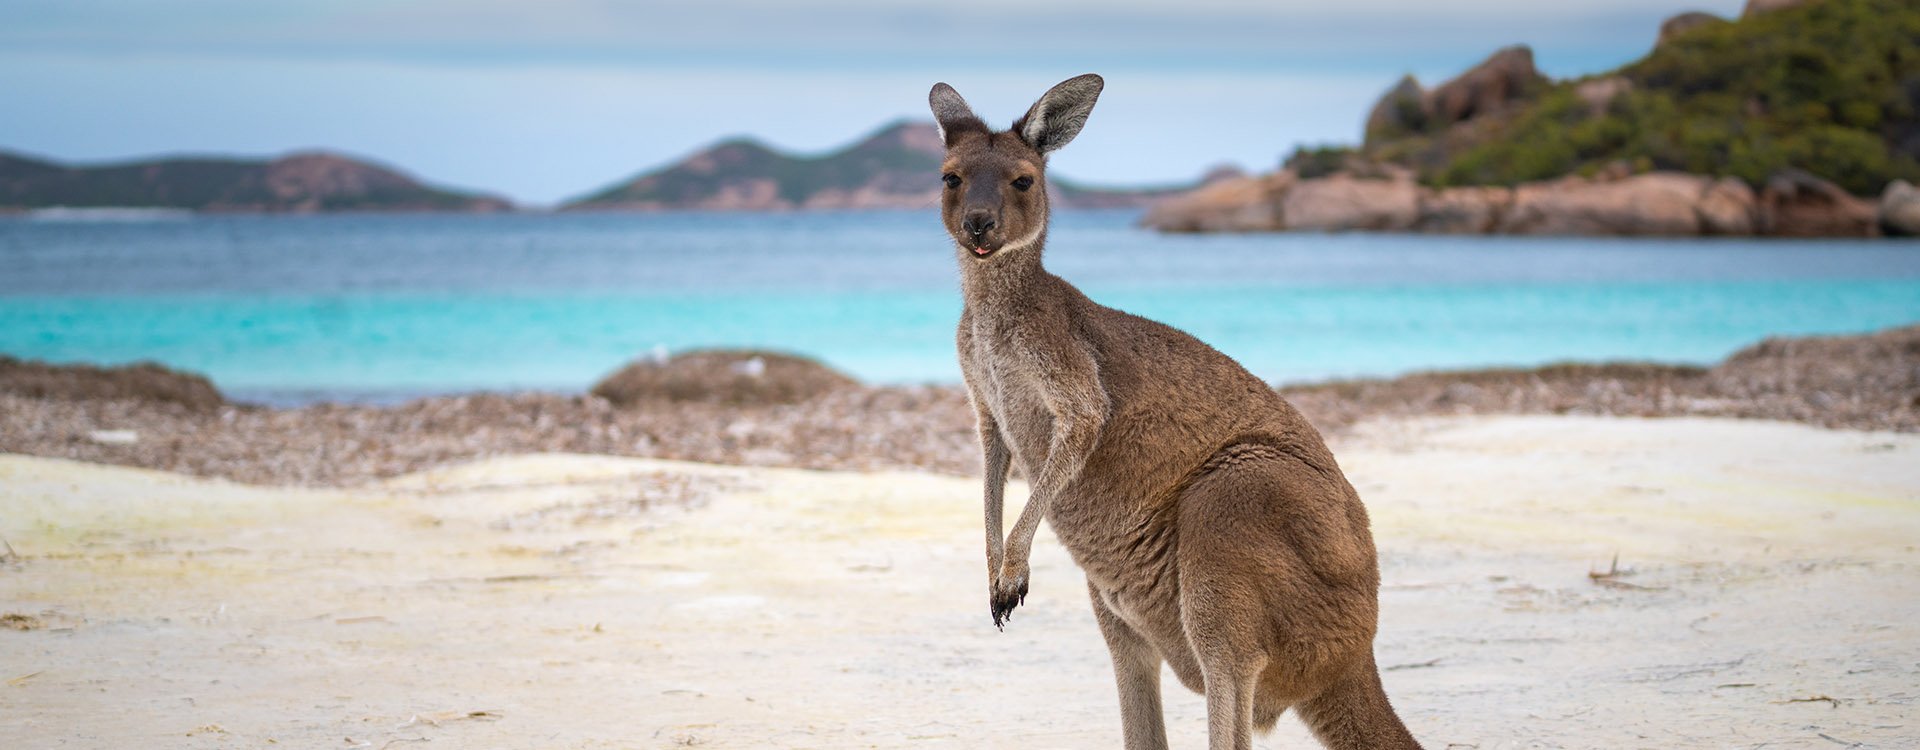 Kangaroo looking at camera, nationally known animal, NSW, New South Wales, Australia